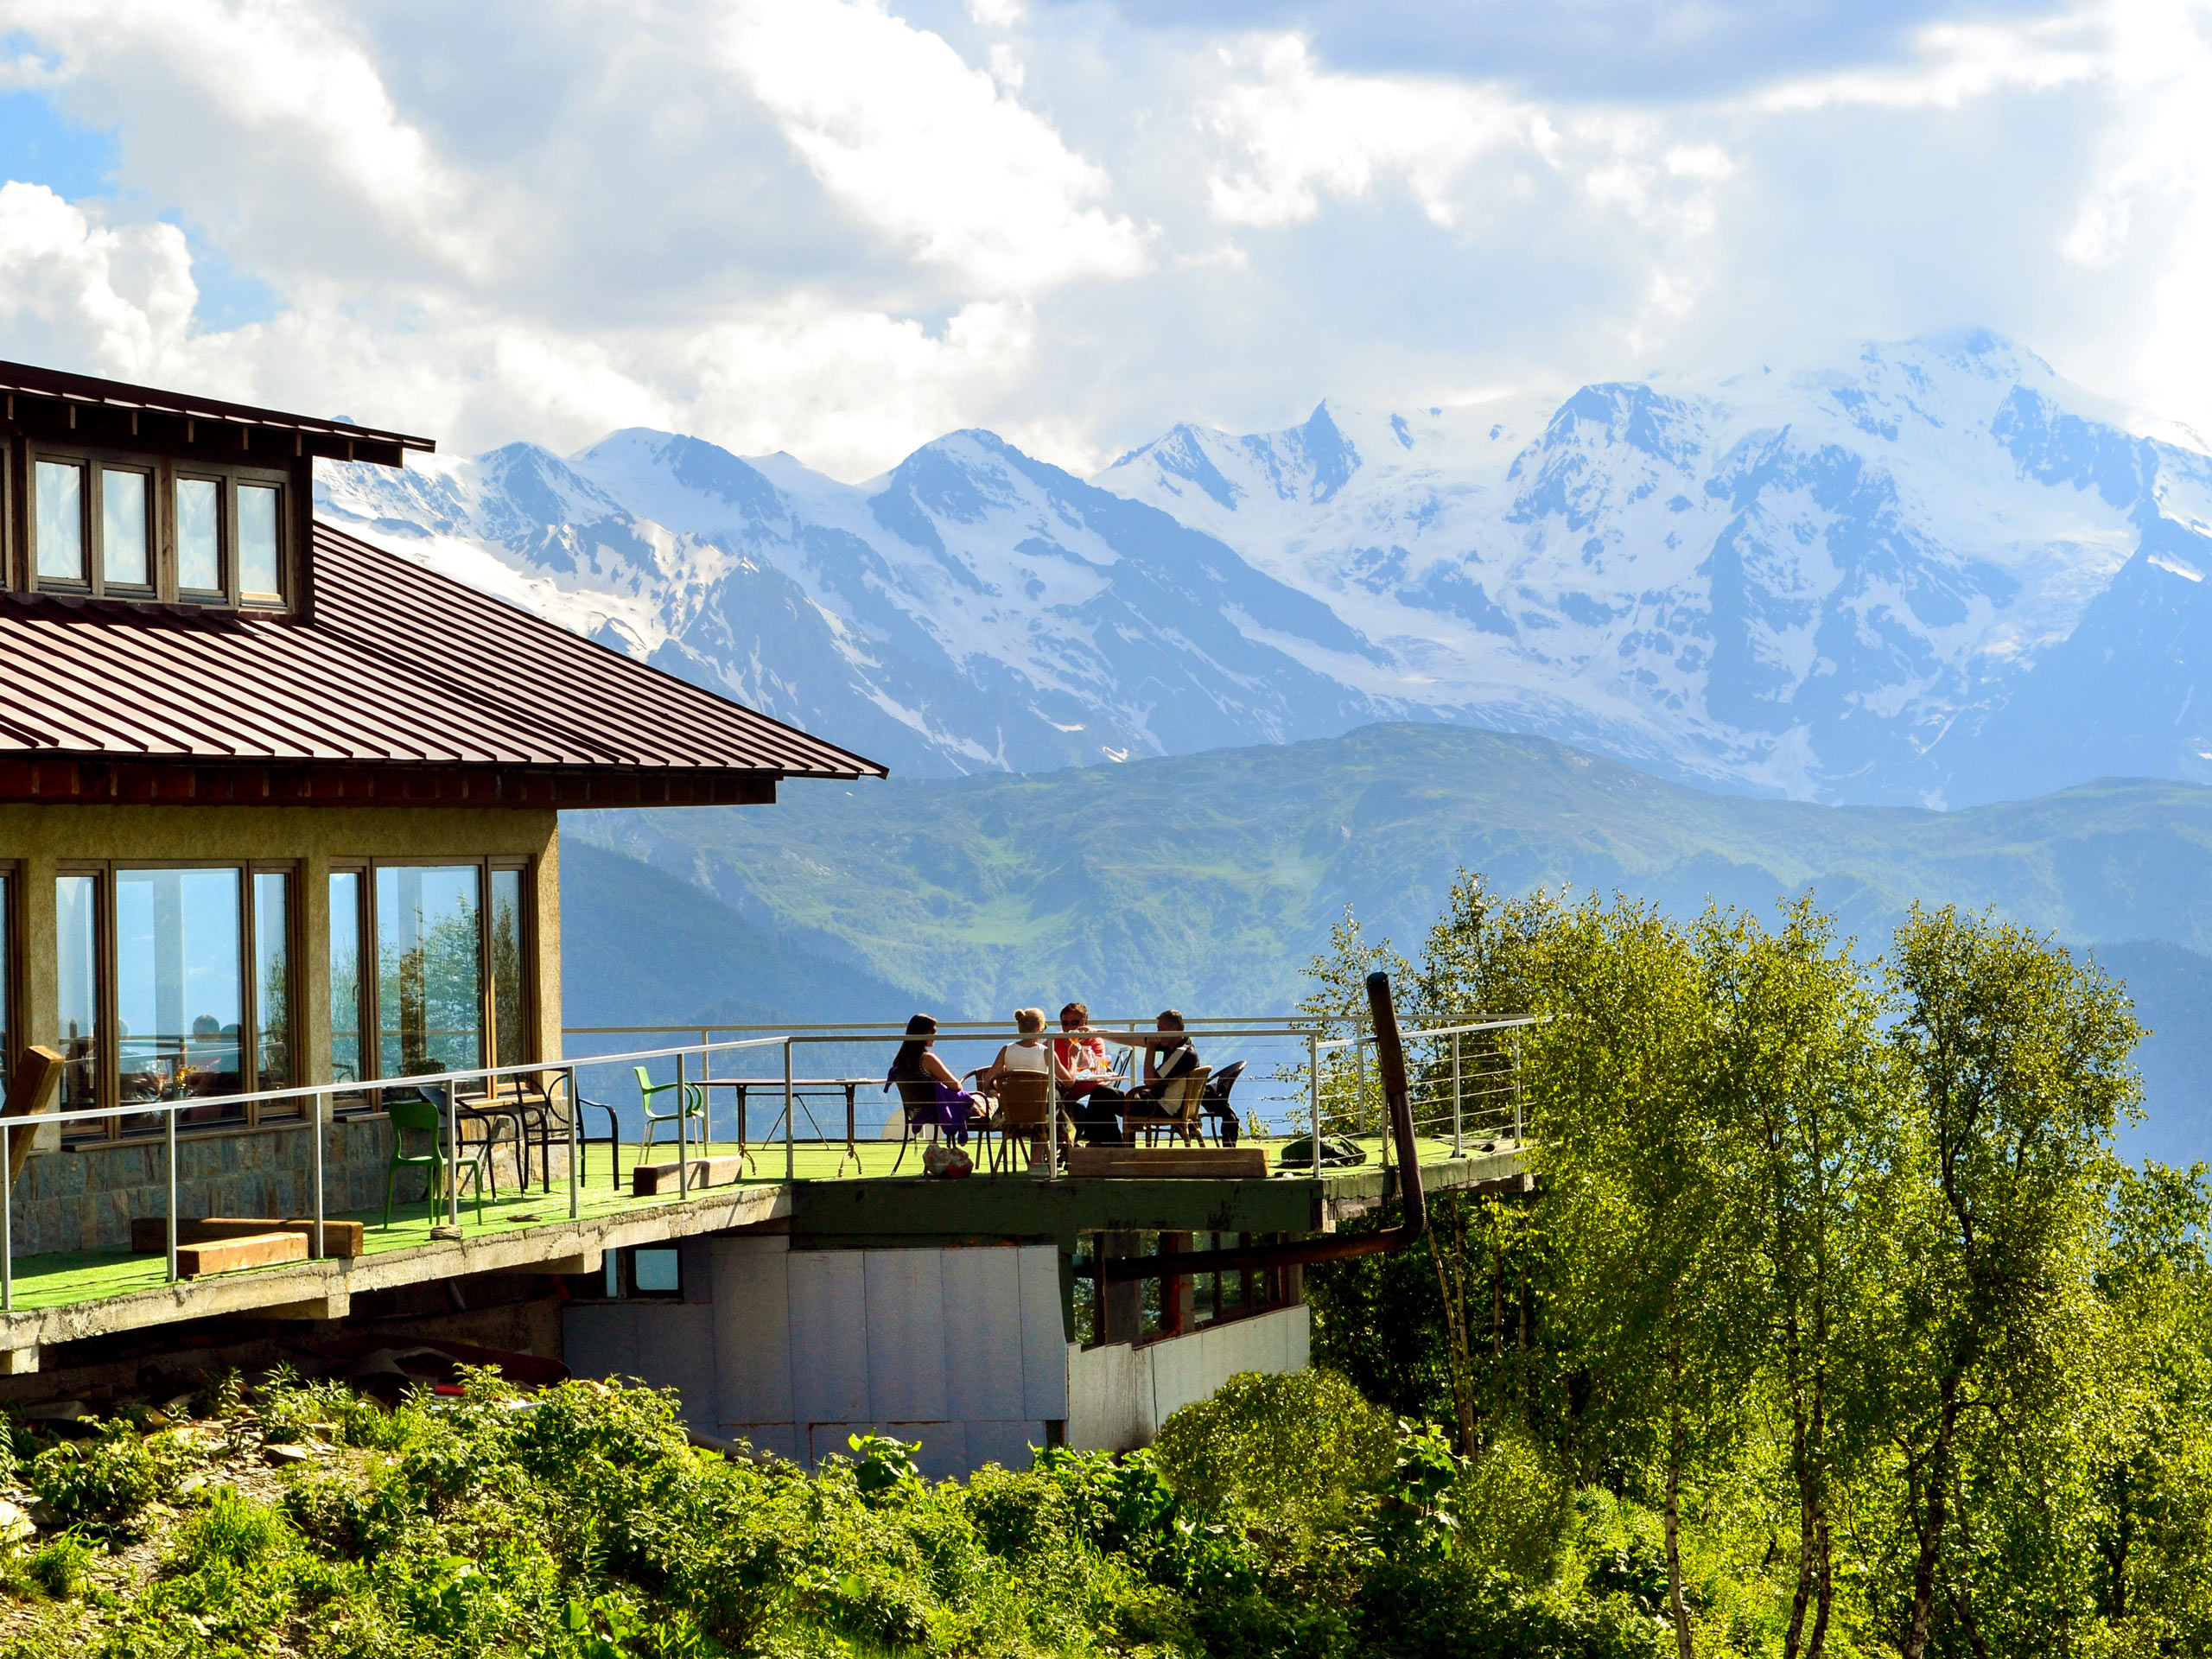 View from Zuruldi mountain in Svaneti